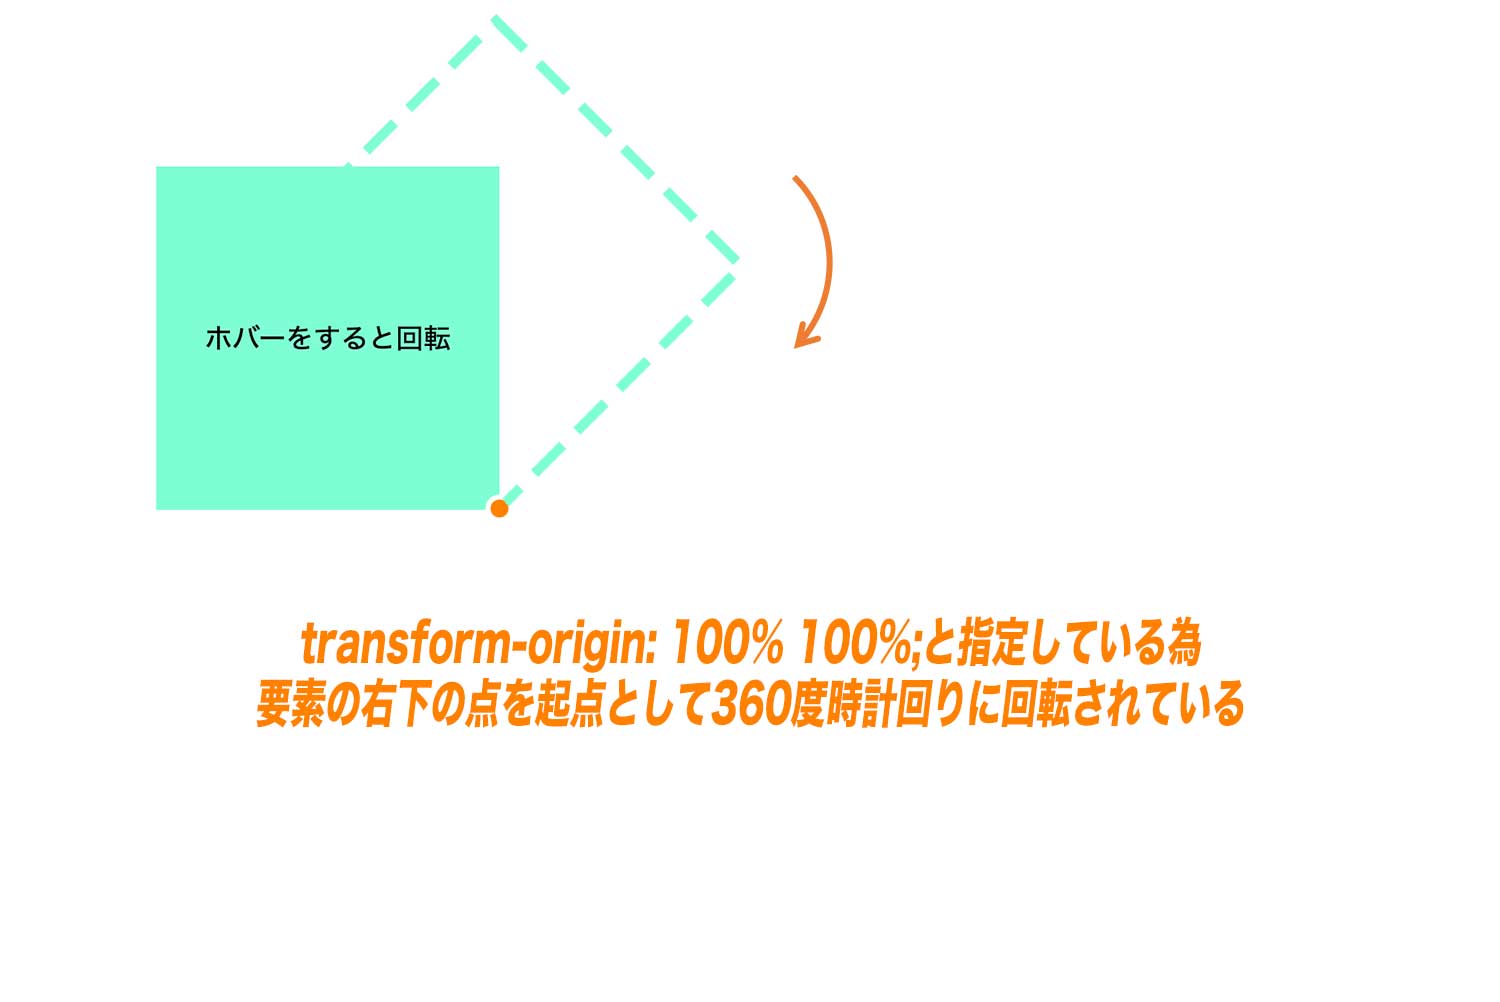 transform-origin: 100% 100%;と指定している為 要素の右下の点を起点として360度時計回りに回転されている